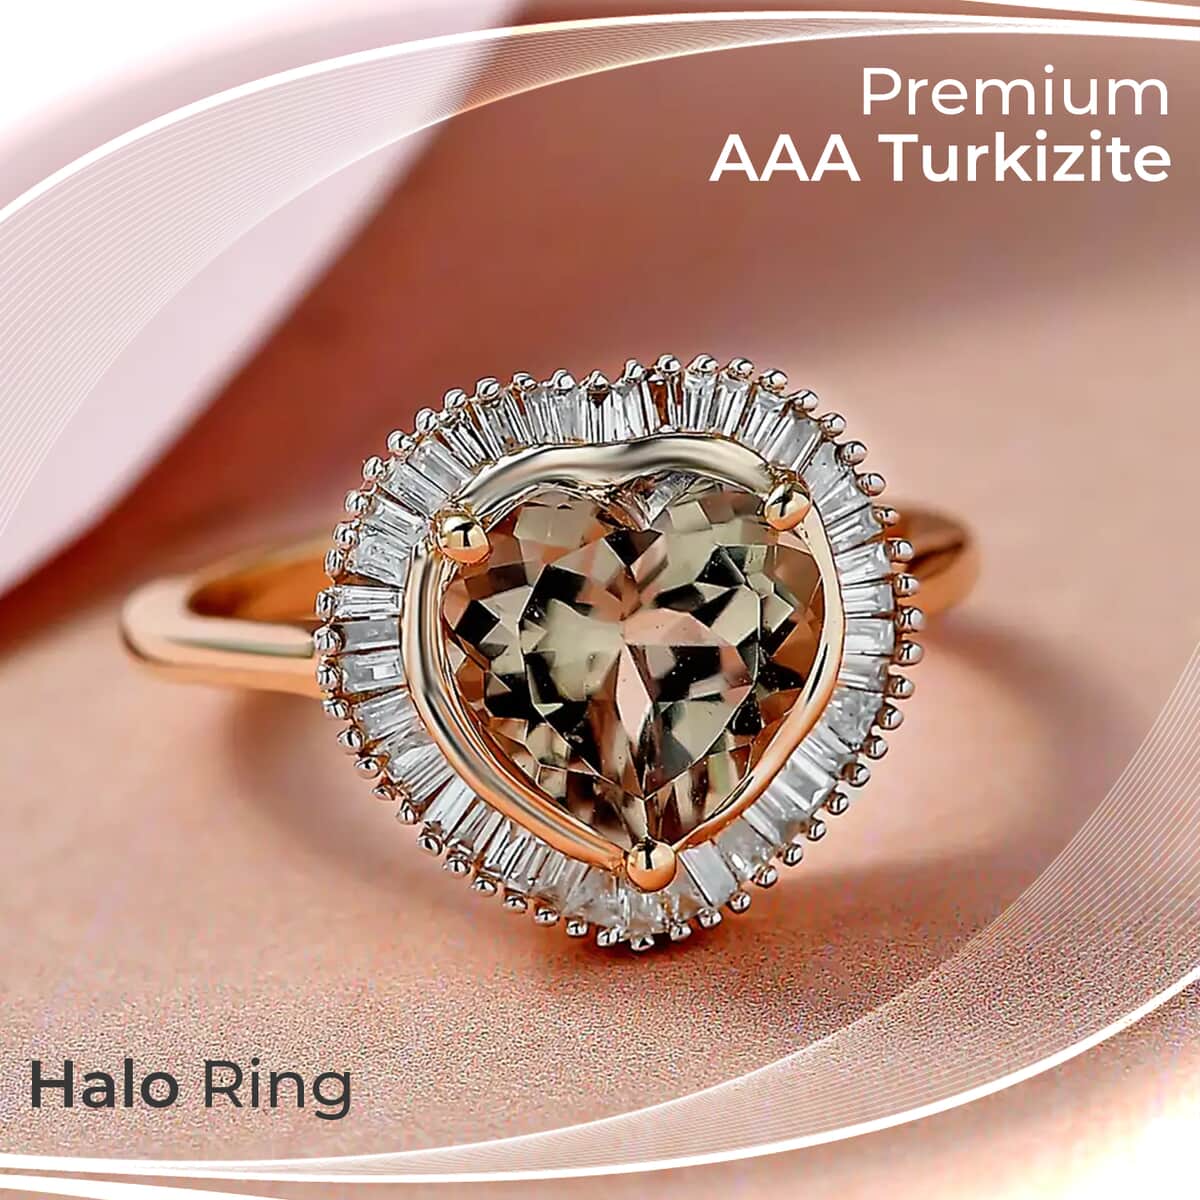 Luxoro 14K Yellow Gold AAA Turkizite Diamond Heart Ring, Halo Ring, Diamond Ring, Wedding Rings, Engagement Ring 2.25 ctw (Size 10) image number 1